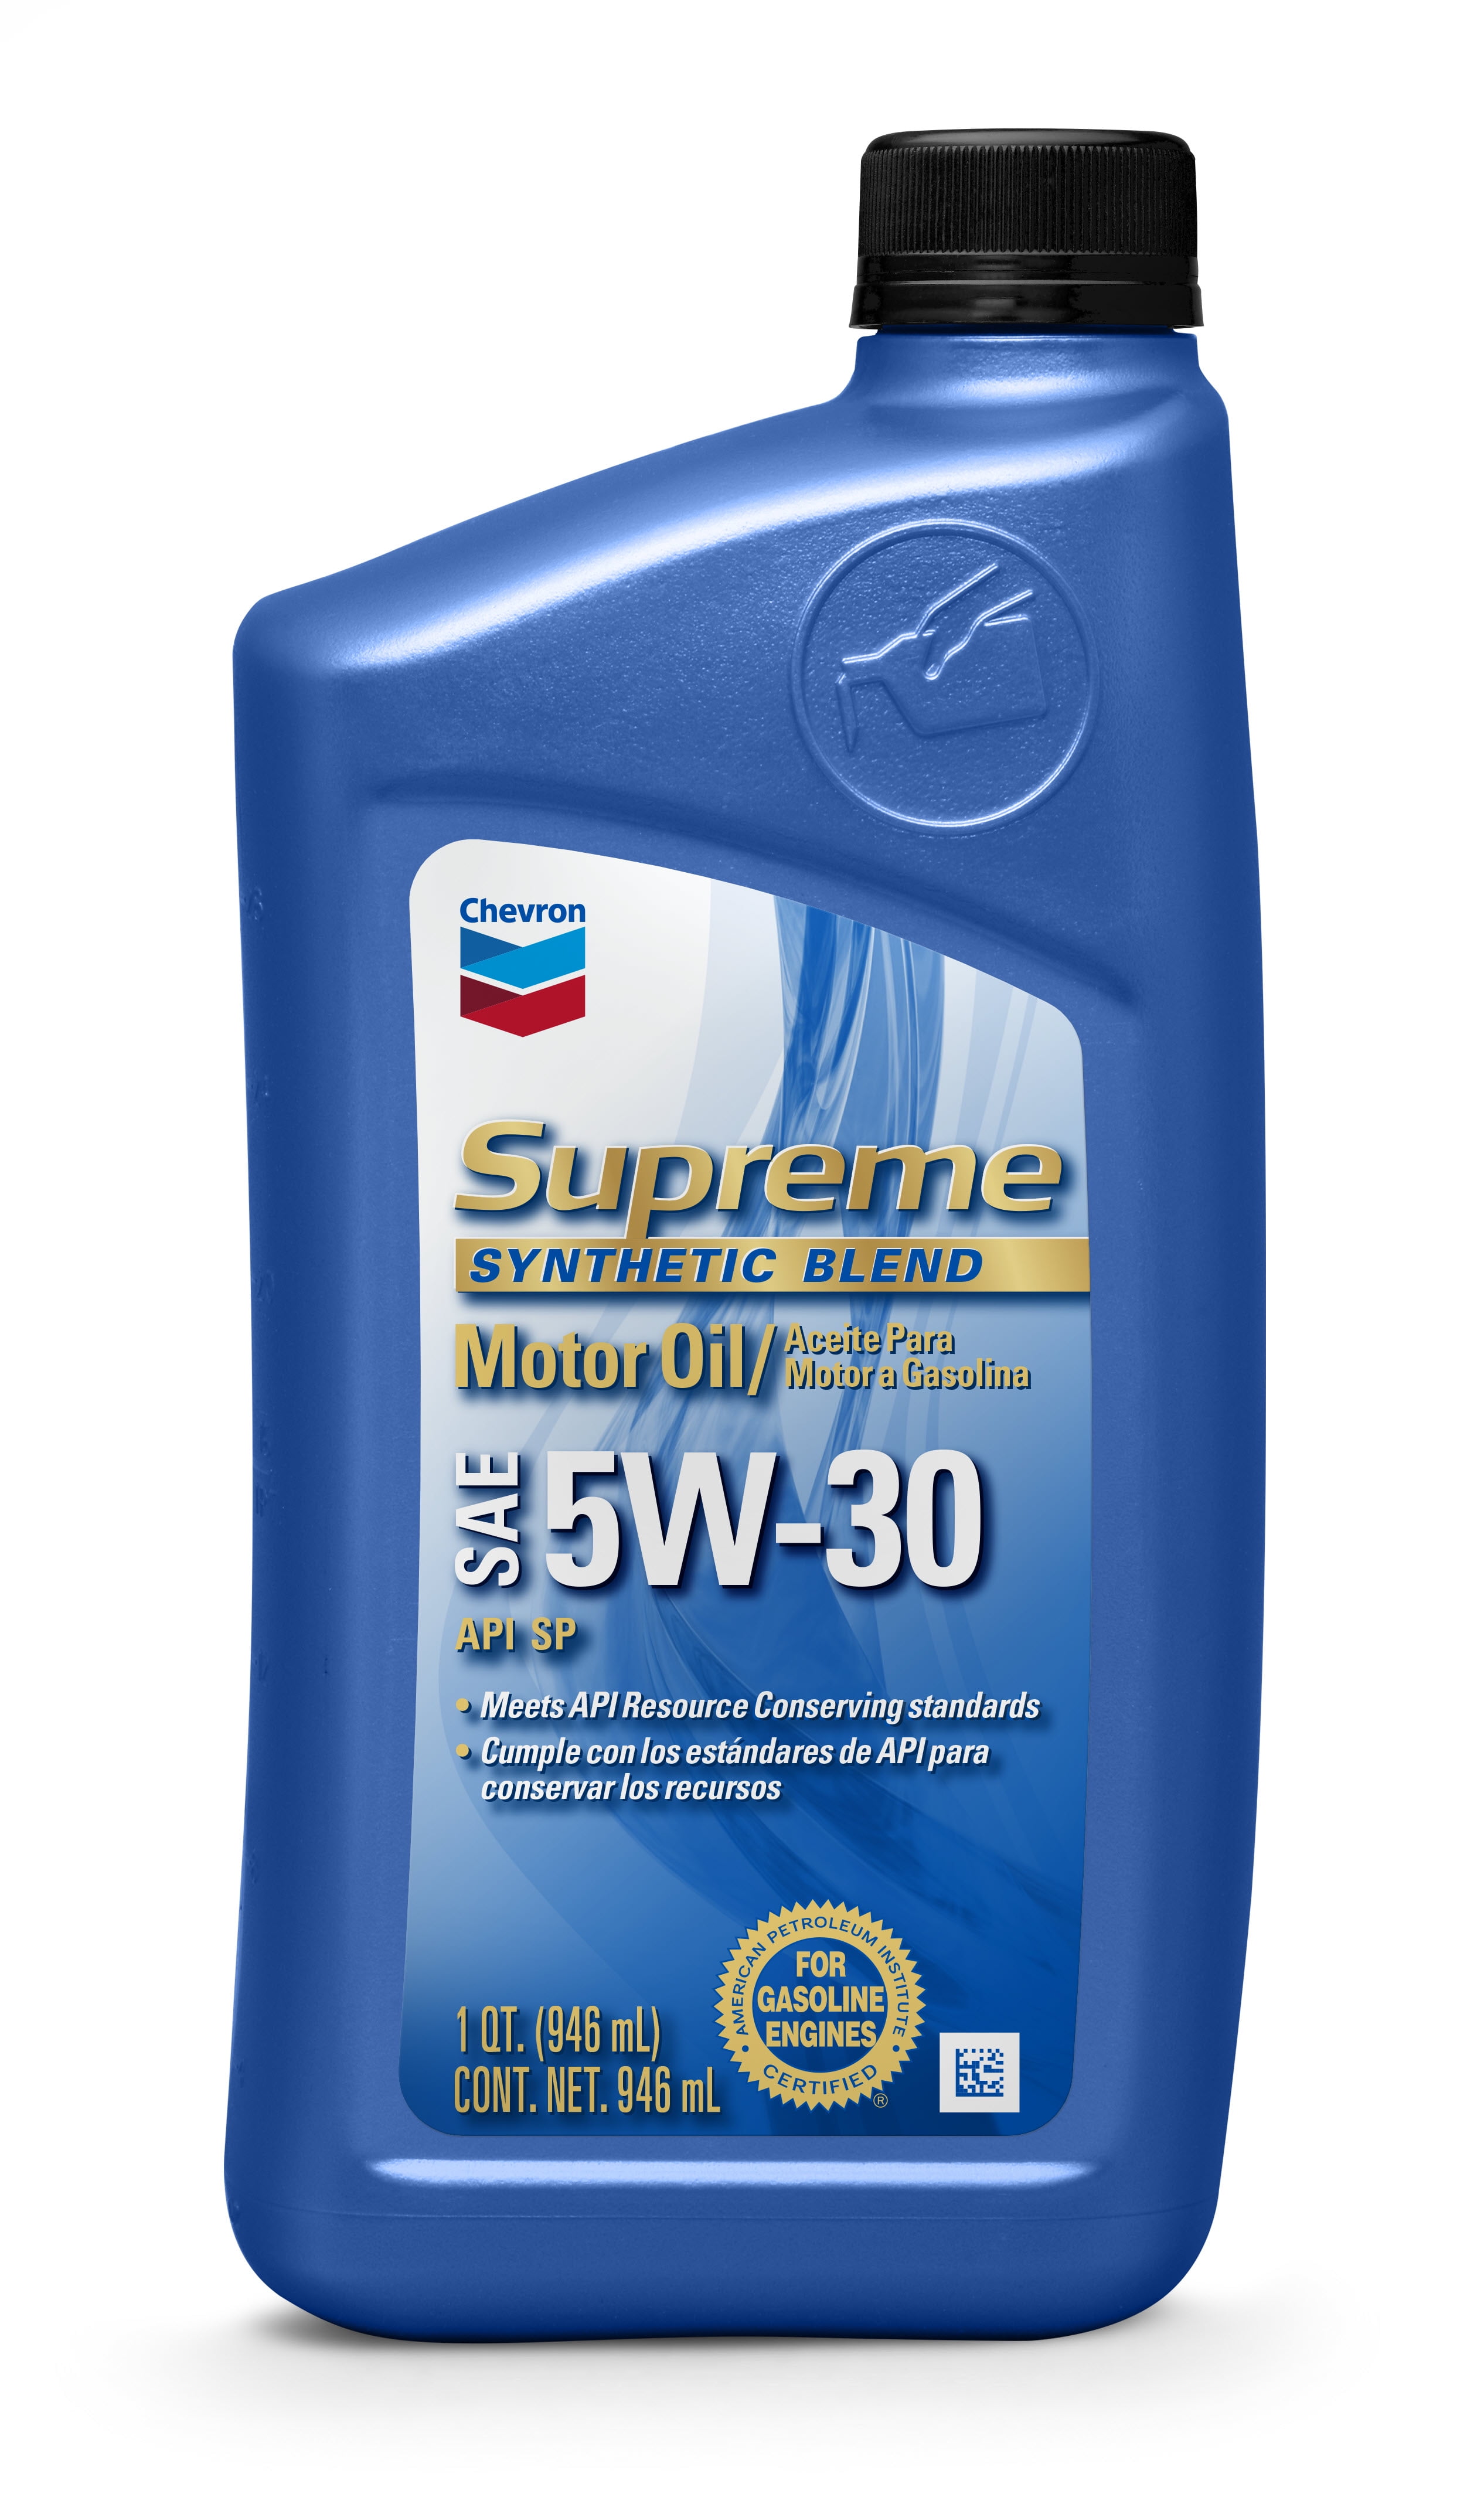 Chevron Supreme Synthetic Blend Motor Oil 5W 30 1 Quart Walmart 